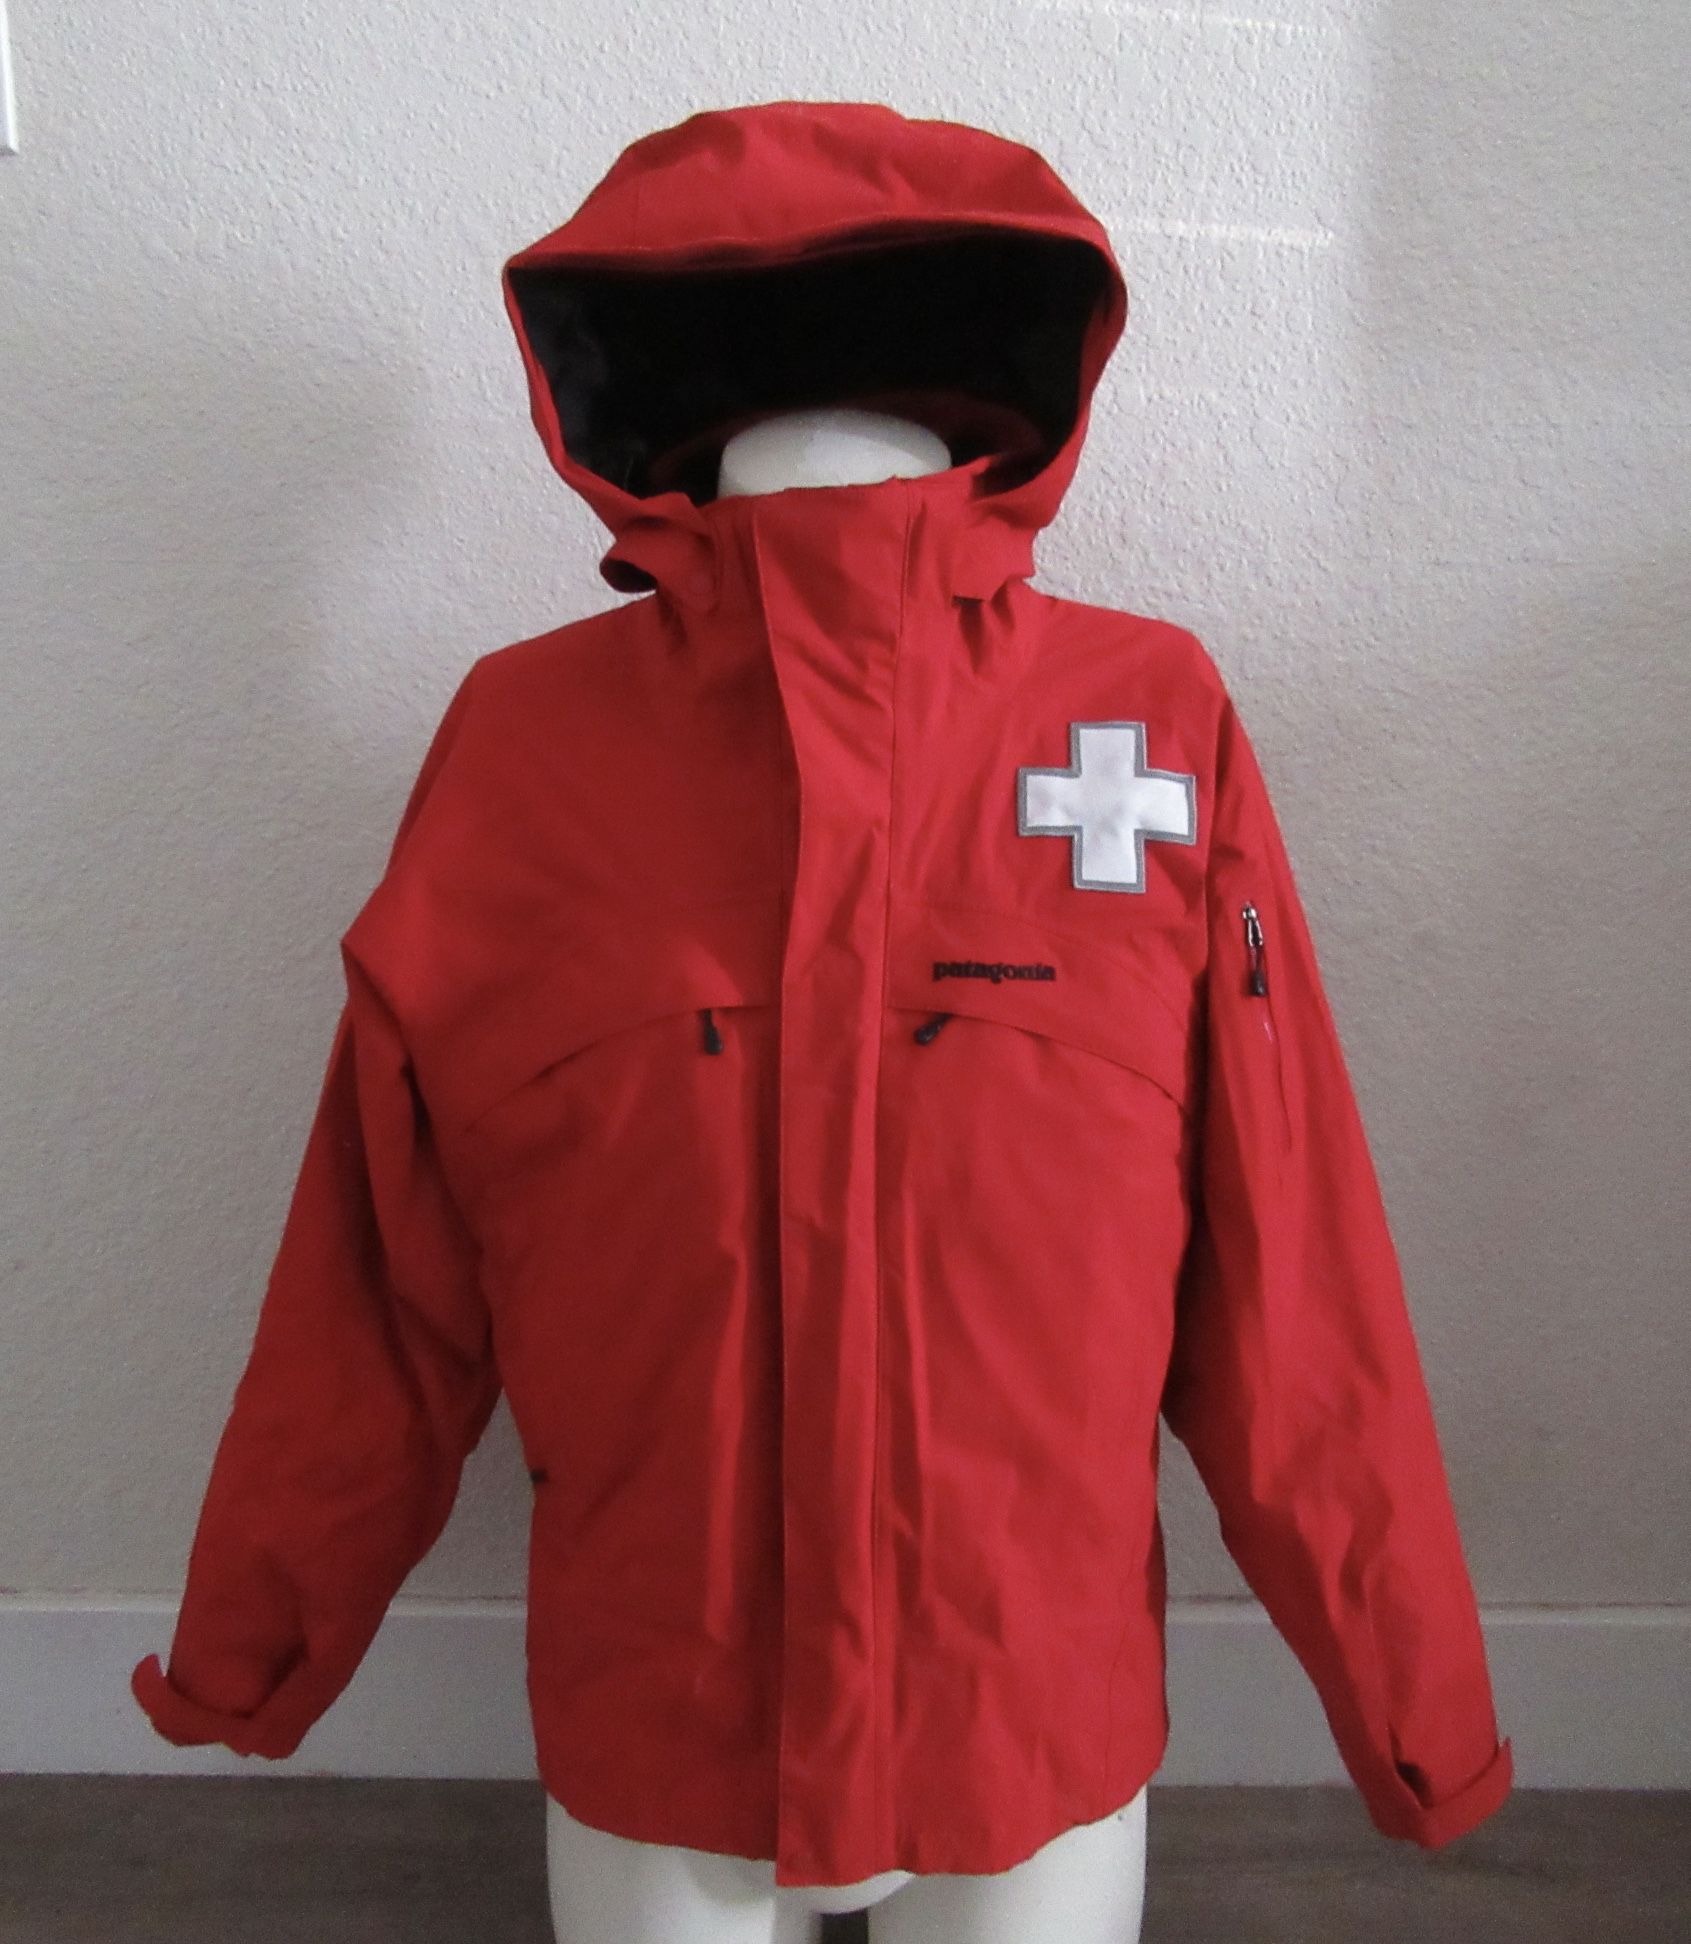 Men's Size Small Patagonia Red Ski Patrol Hooded Reflective Jacket Coat